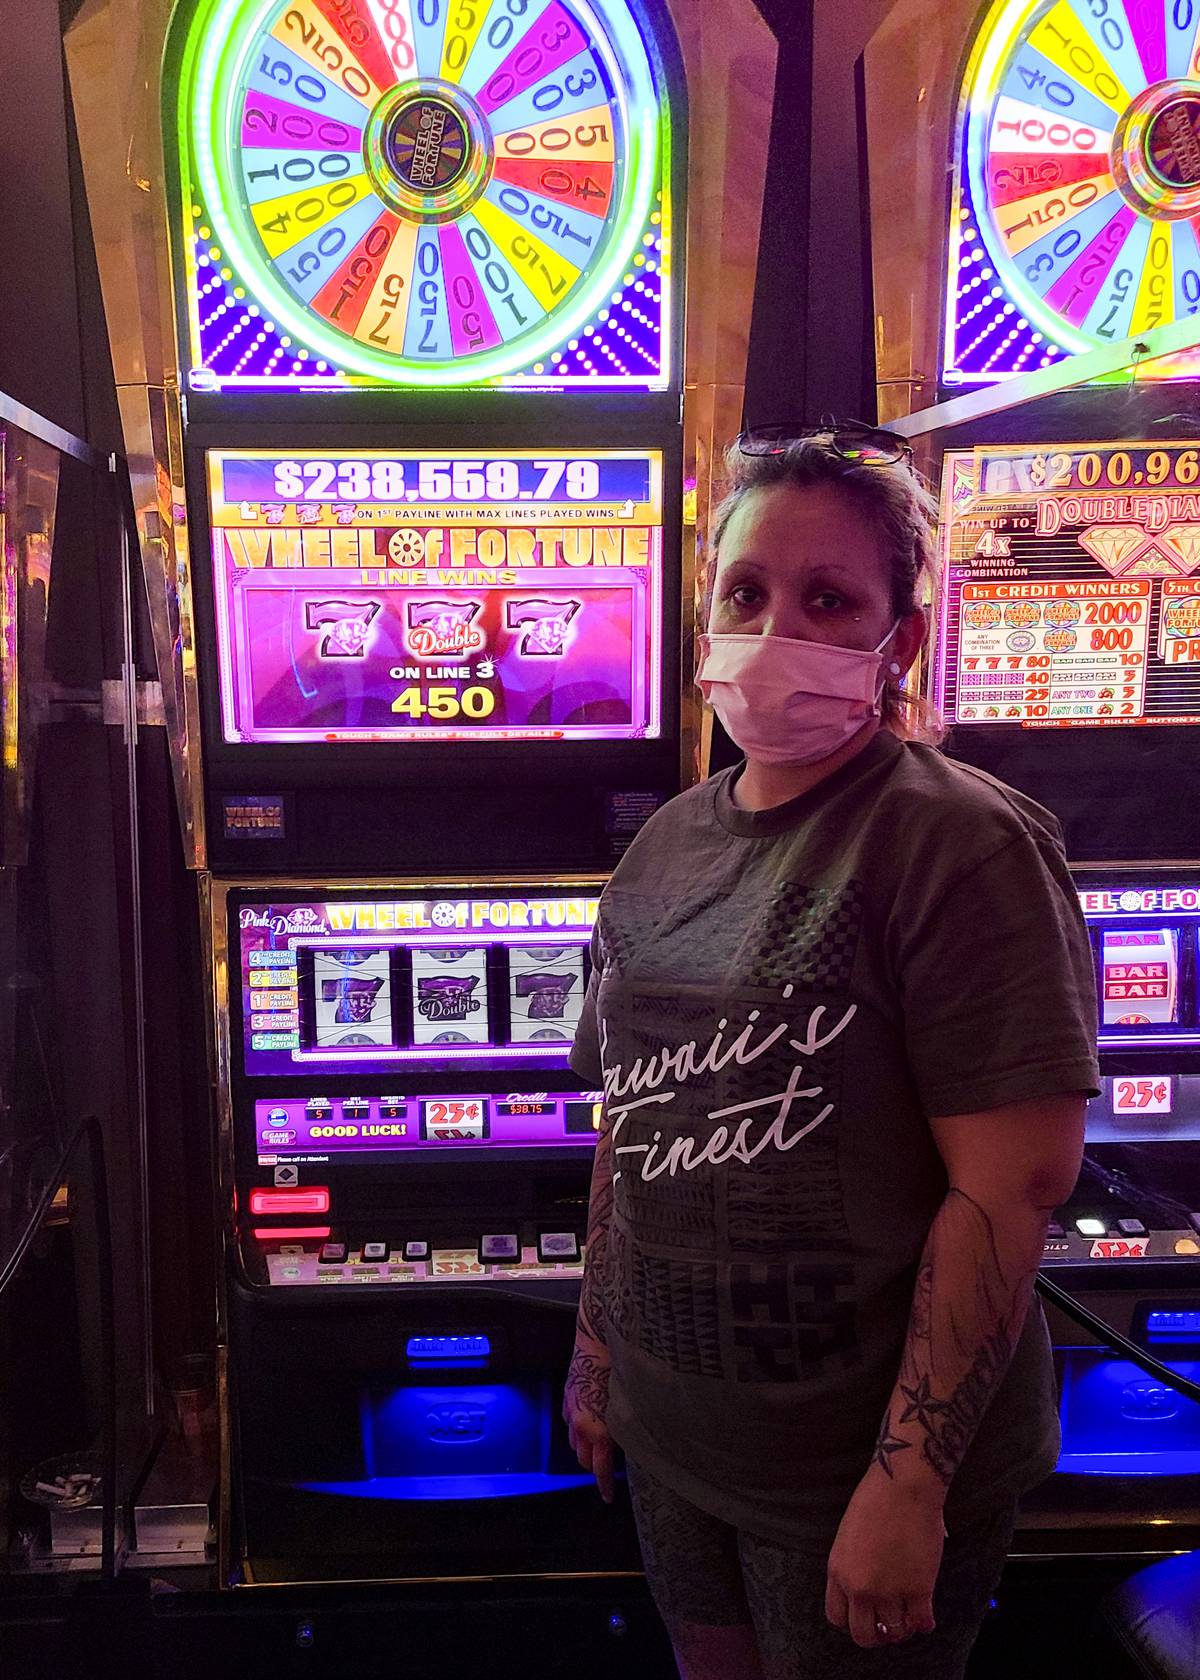 wheel of fortune slot machine jackpot